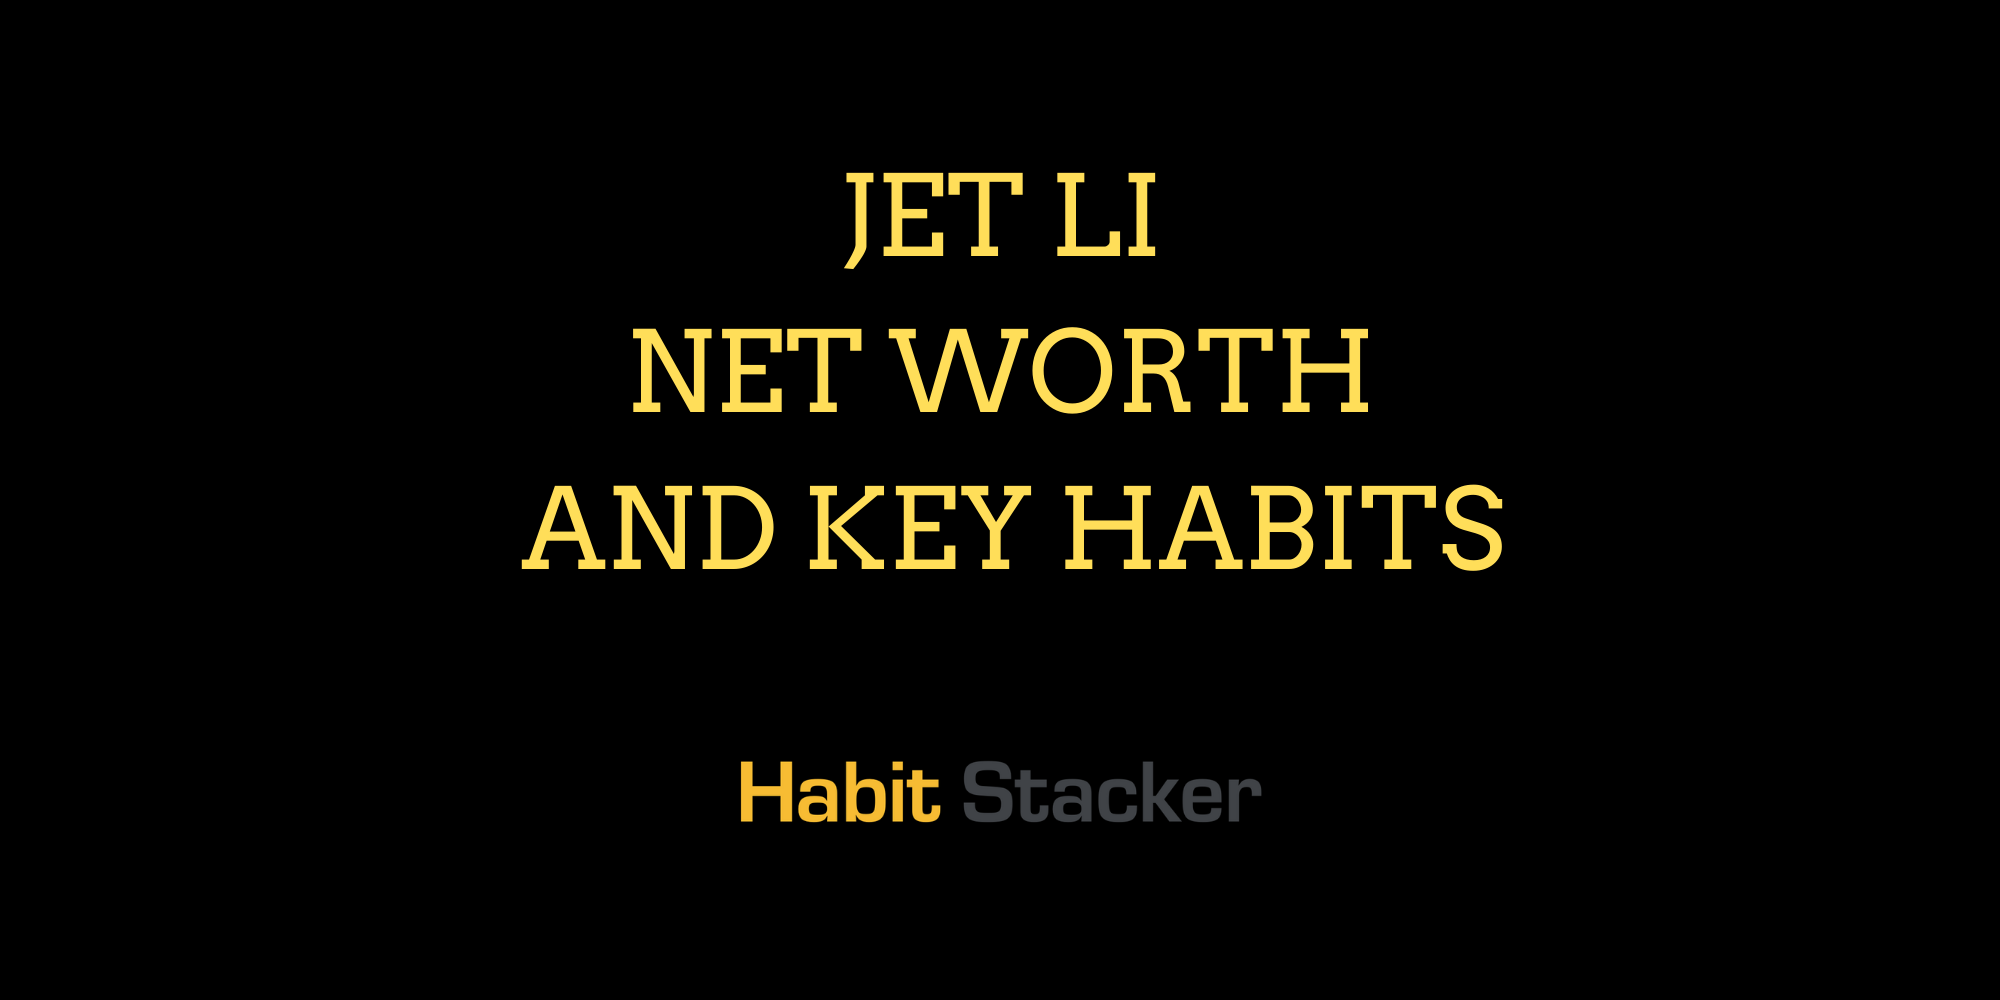 Jet Li Net Worth and Key Habits